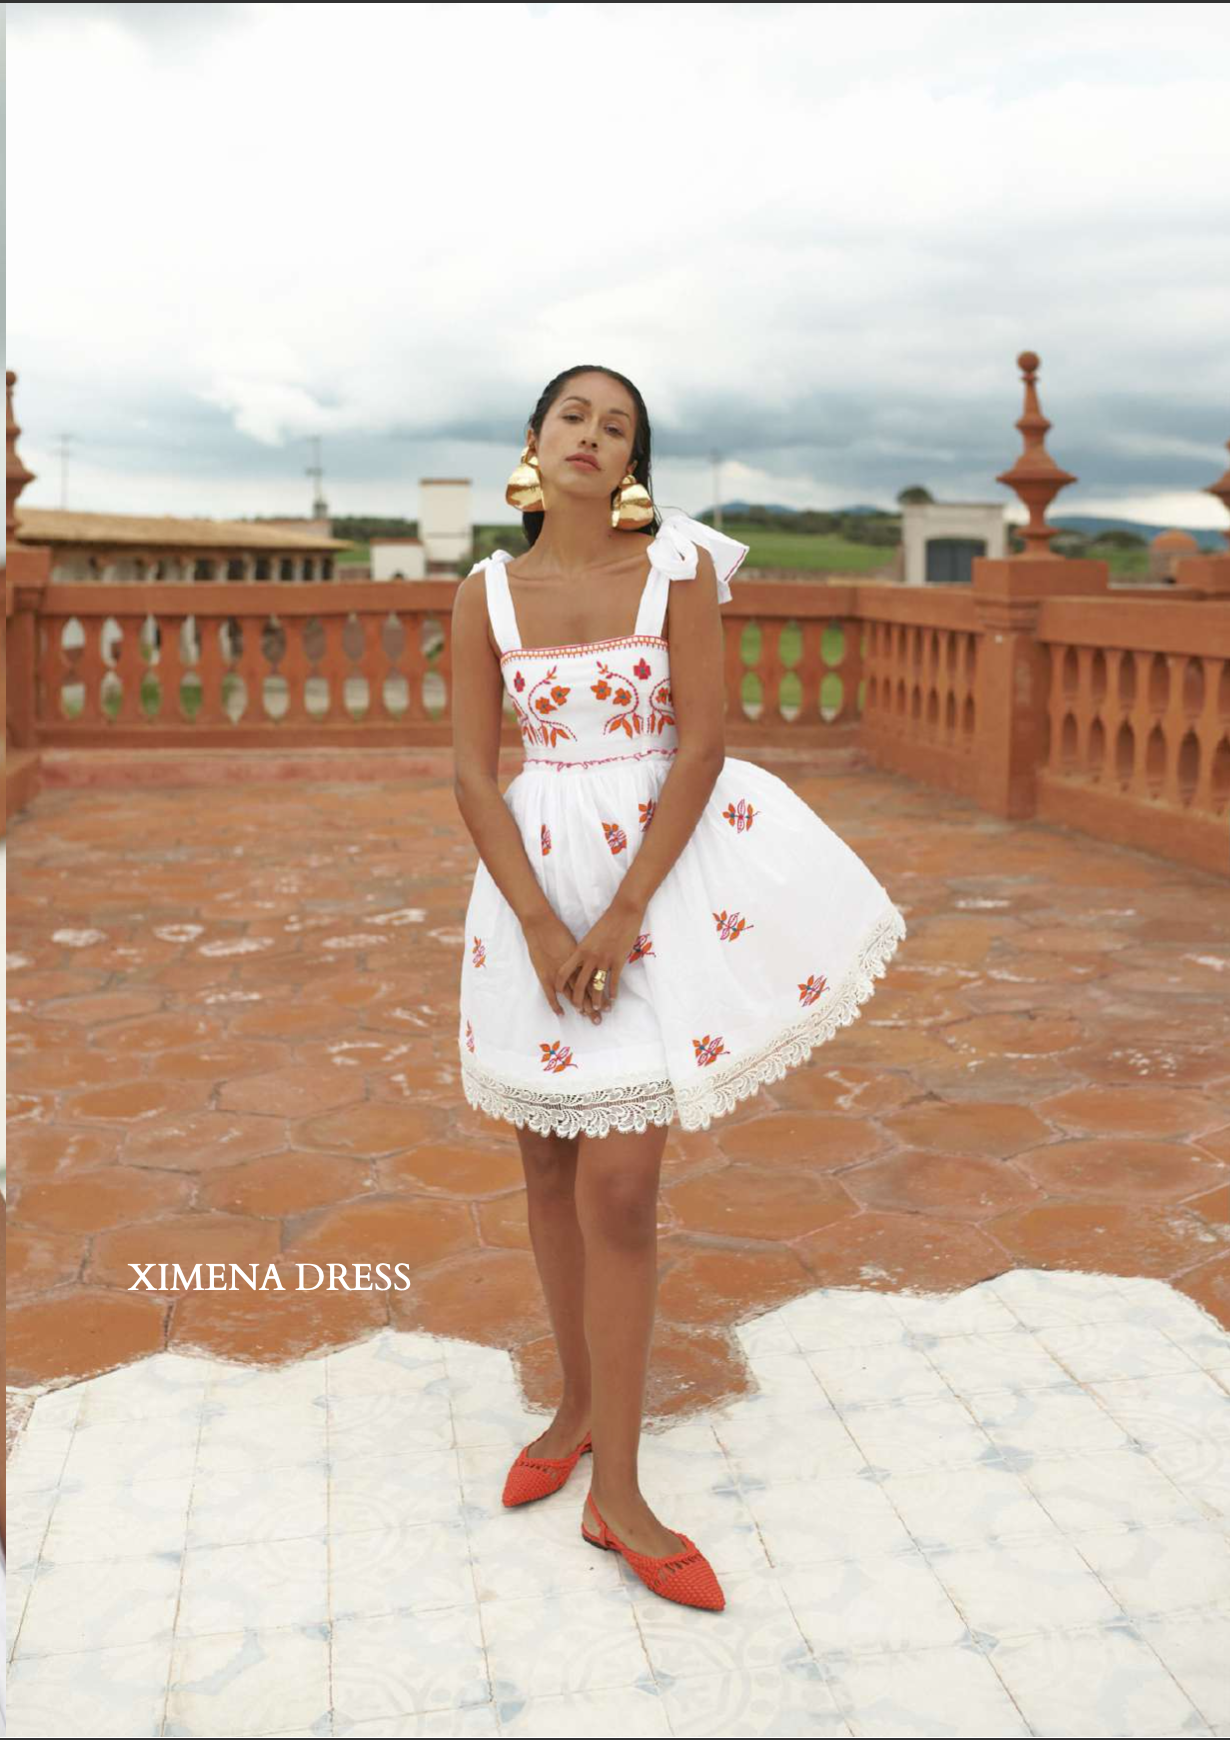 Waimari Ximena Dress - Premium Dresses from Marina St Barth - Just $395.00! Shop now at Marina St Barth